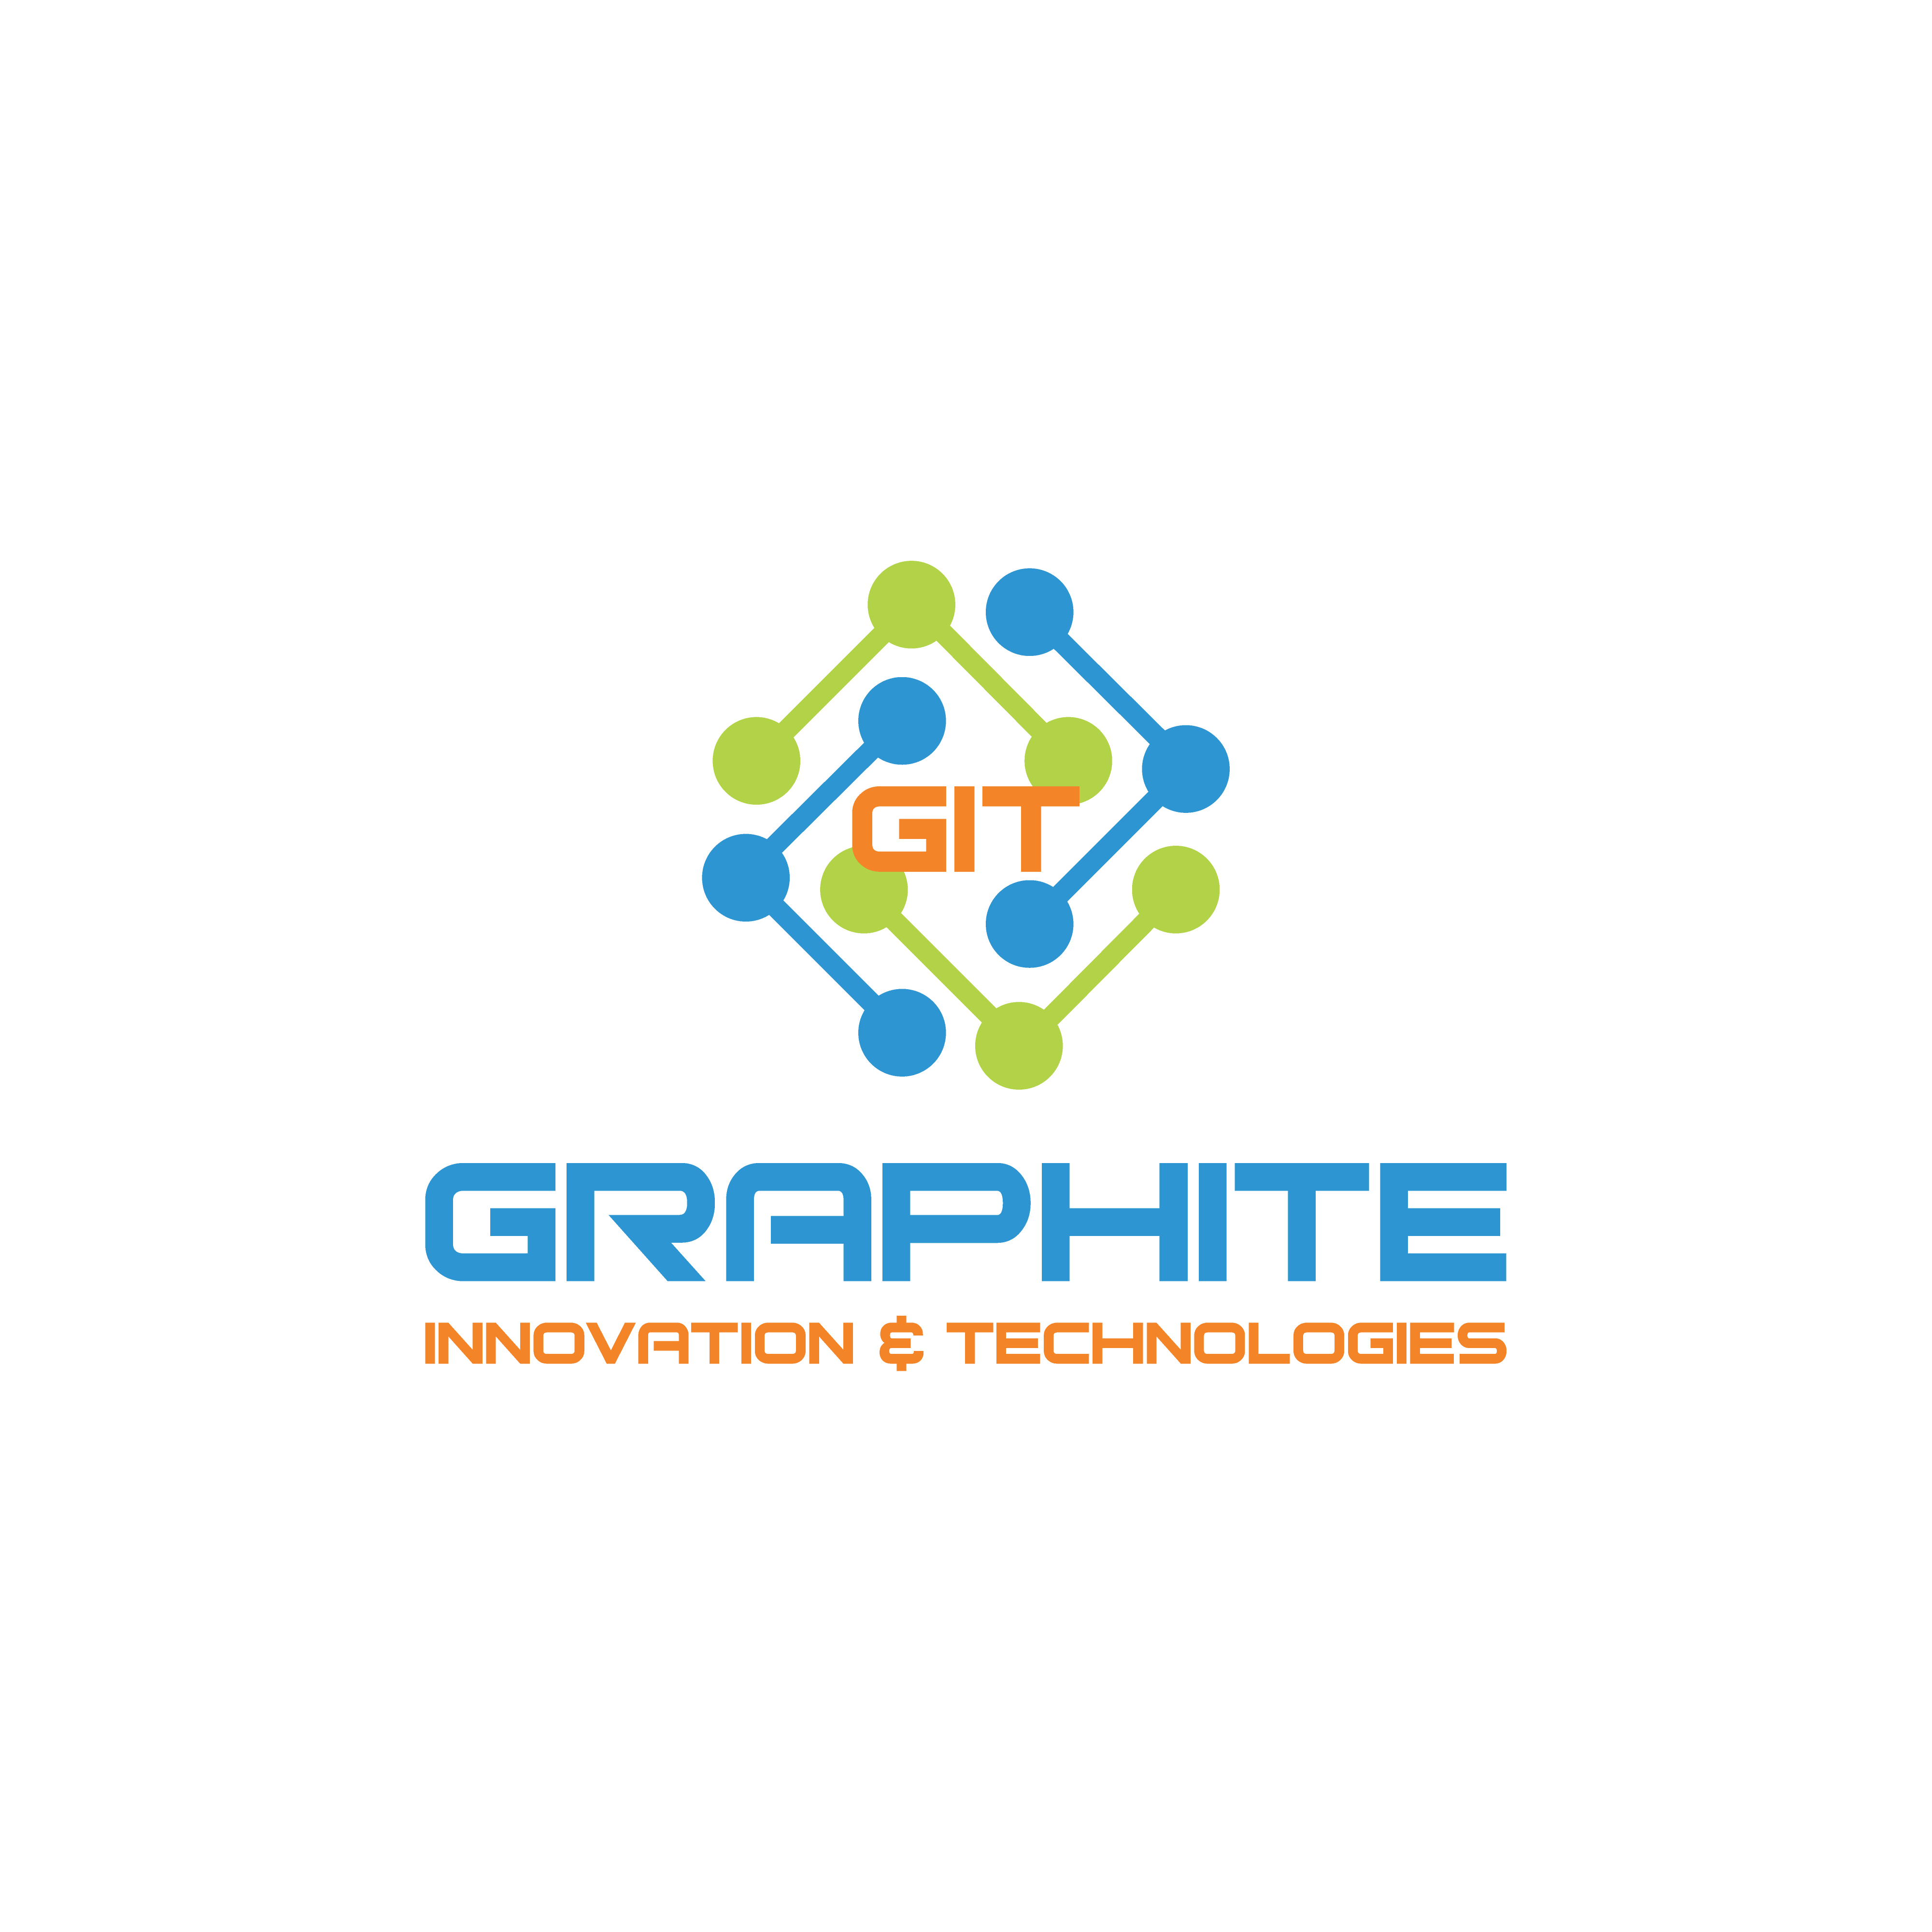 Graphite Innovation & Technologies